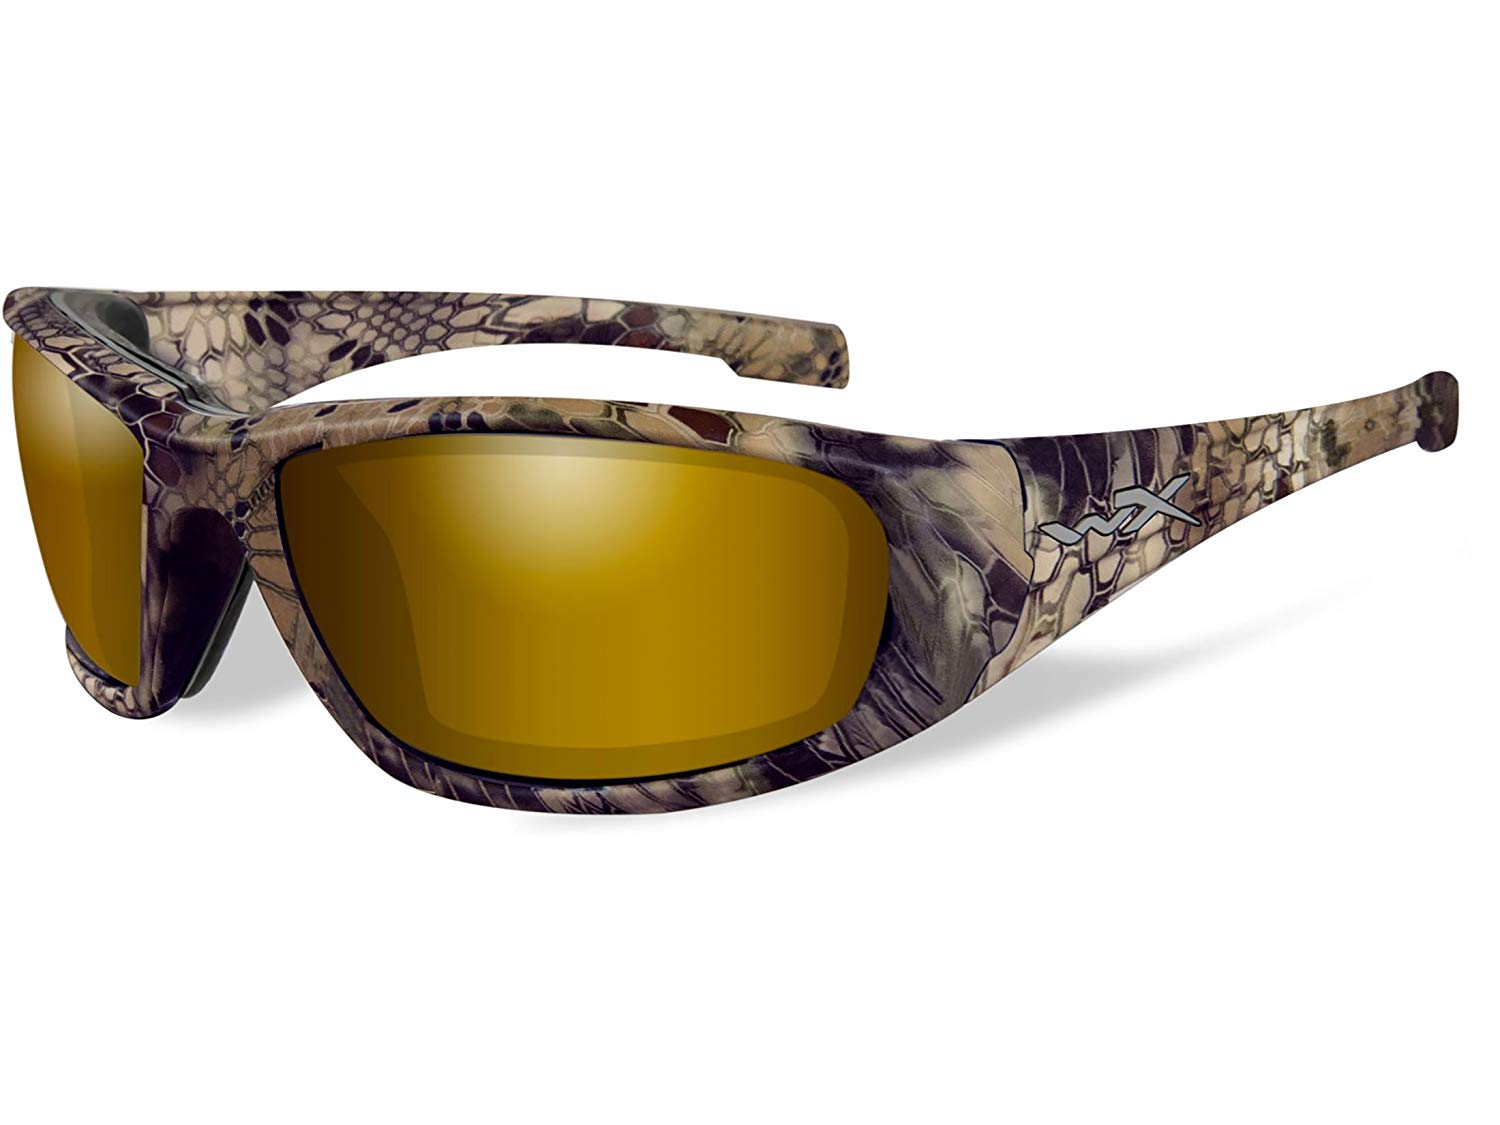 Wiley X WX Boss Men's Sunglasses, Polarized Venice Gold Mirror (Amber) Lens / Kryptek Highlander Frame - CCBOS12 - image 1 of 2